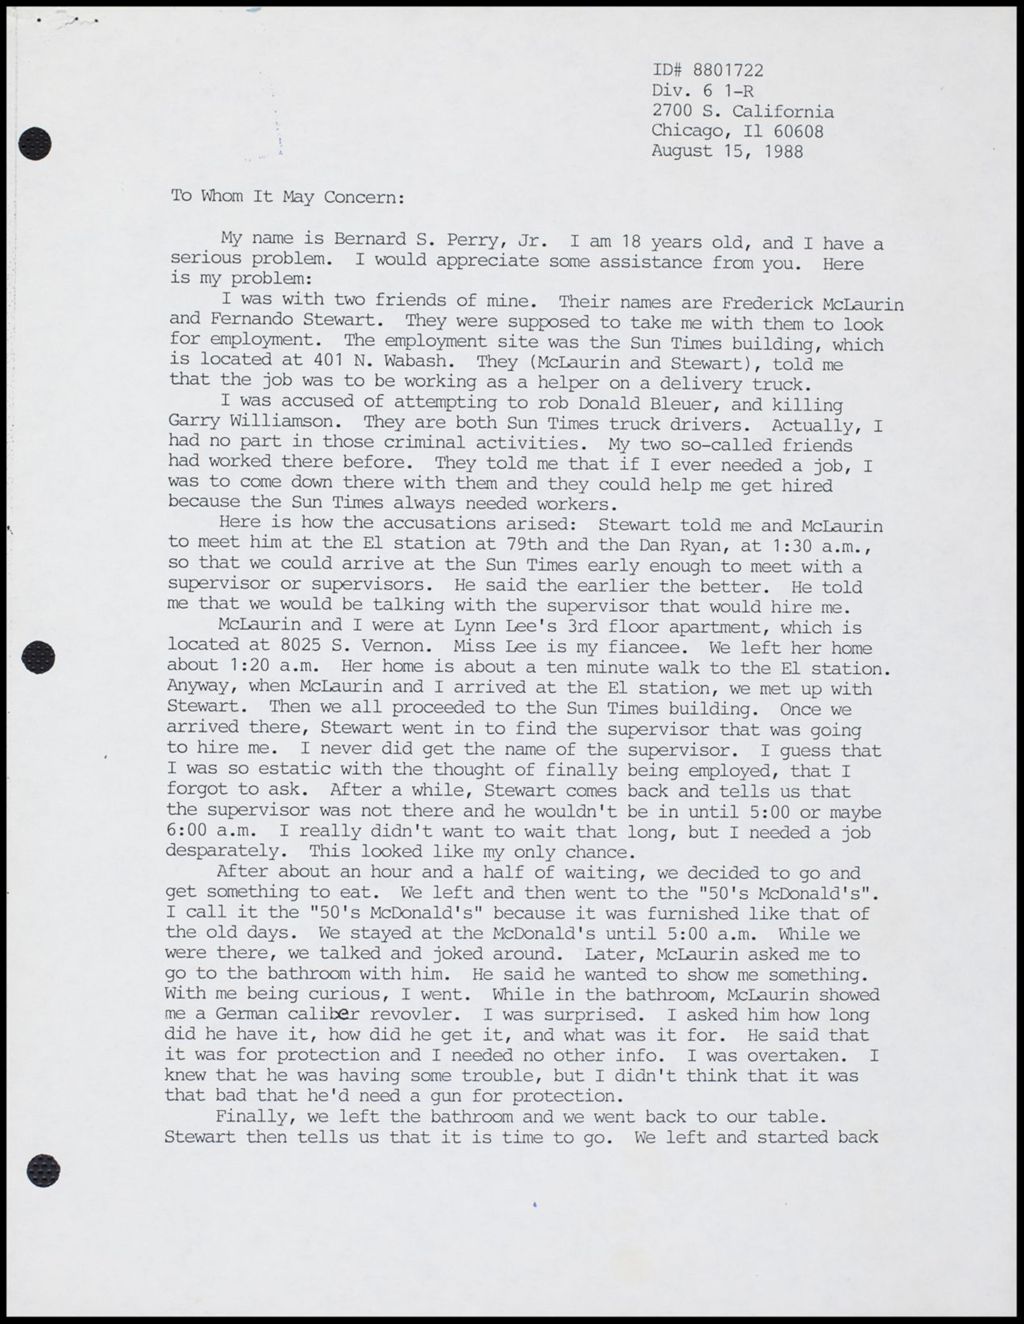 Miniature of Shooting Correspondence, 1988 (Folder II-2169)